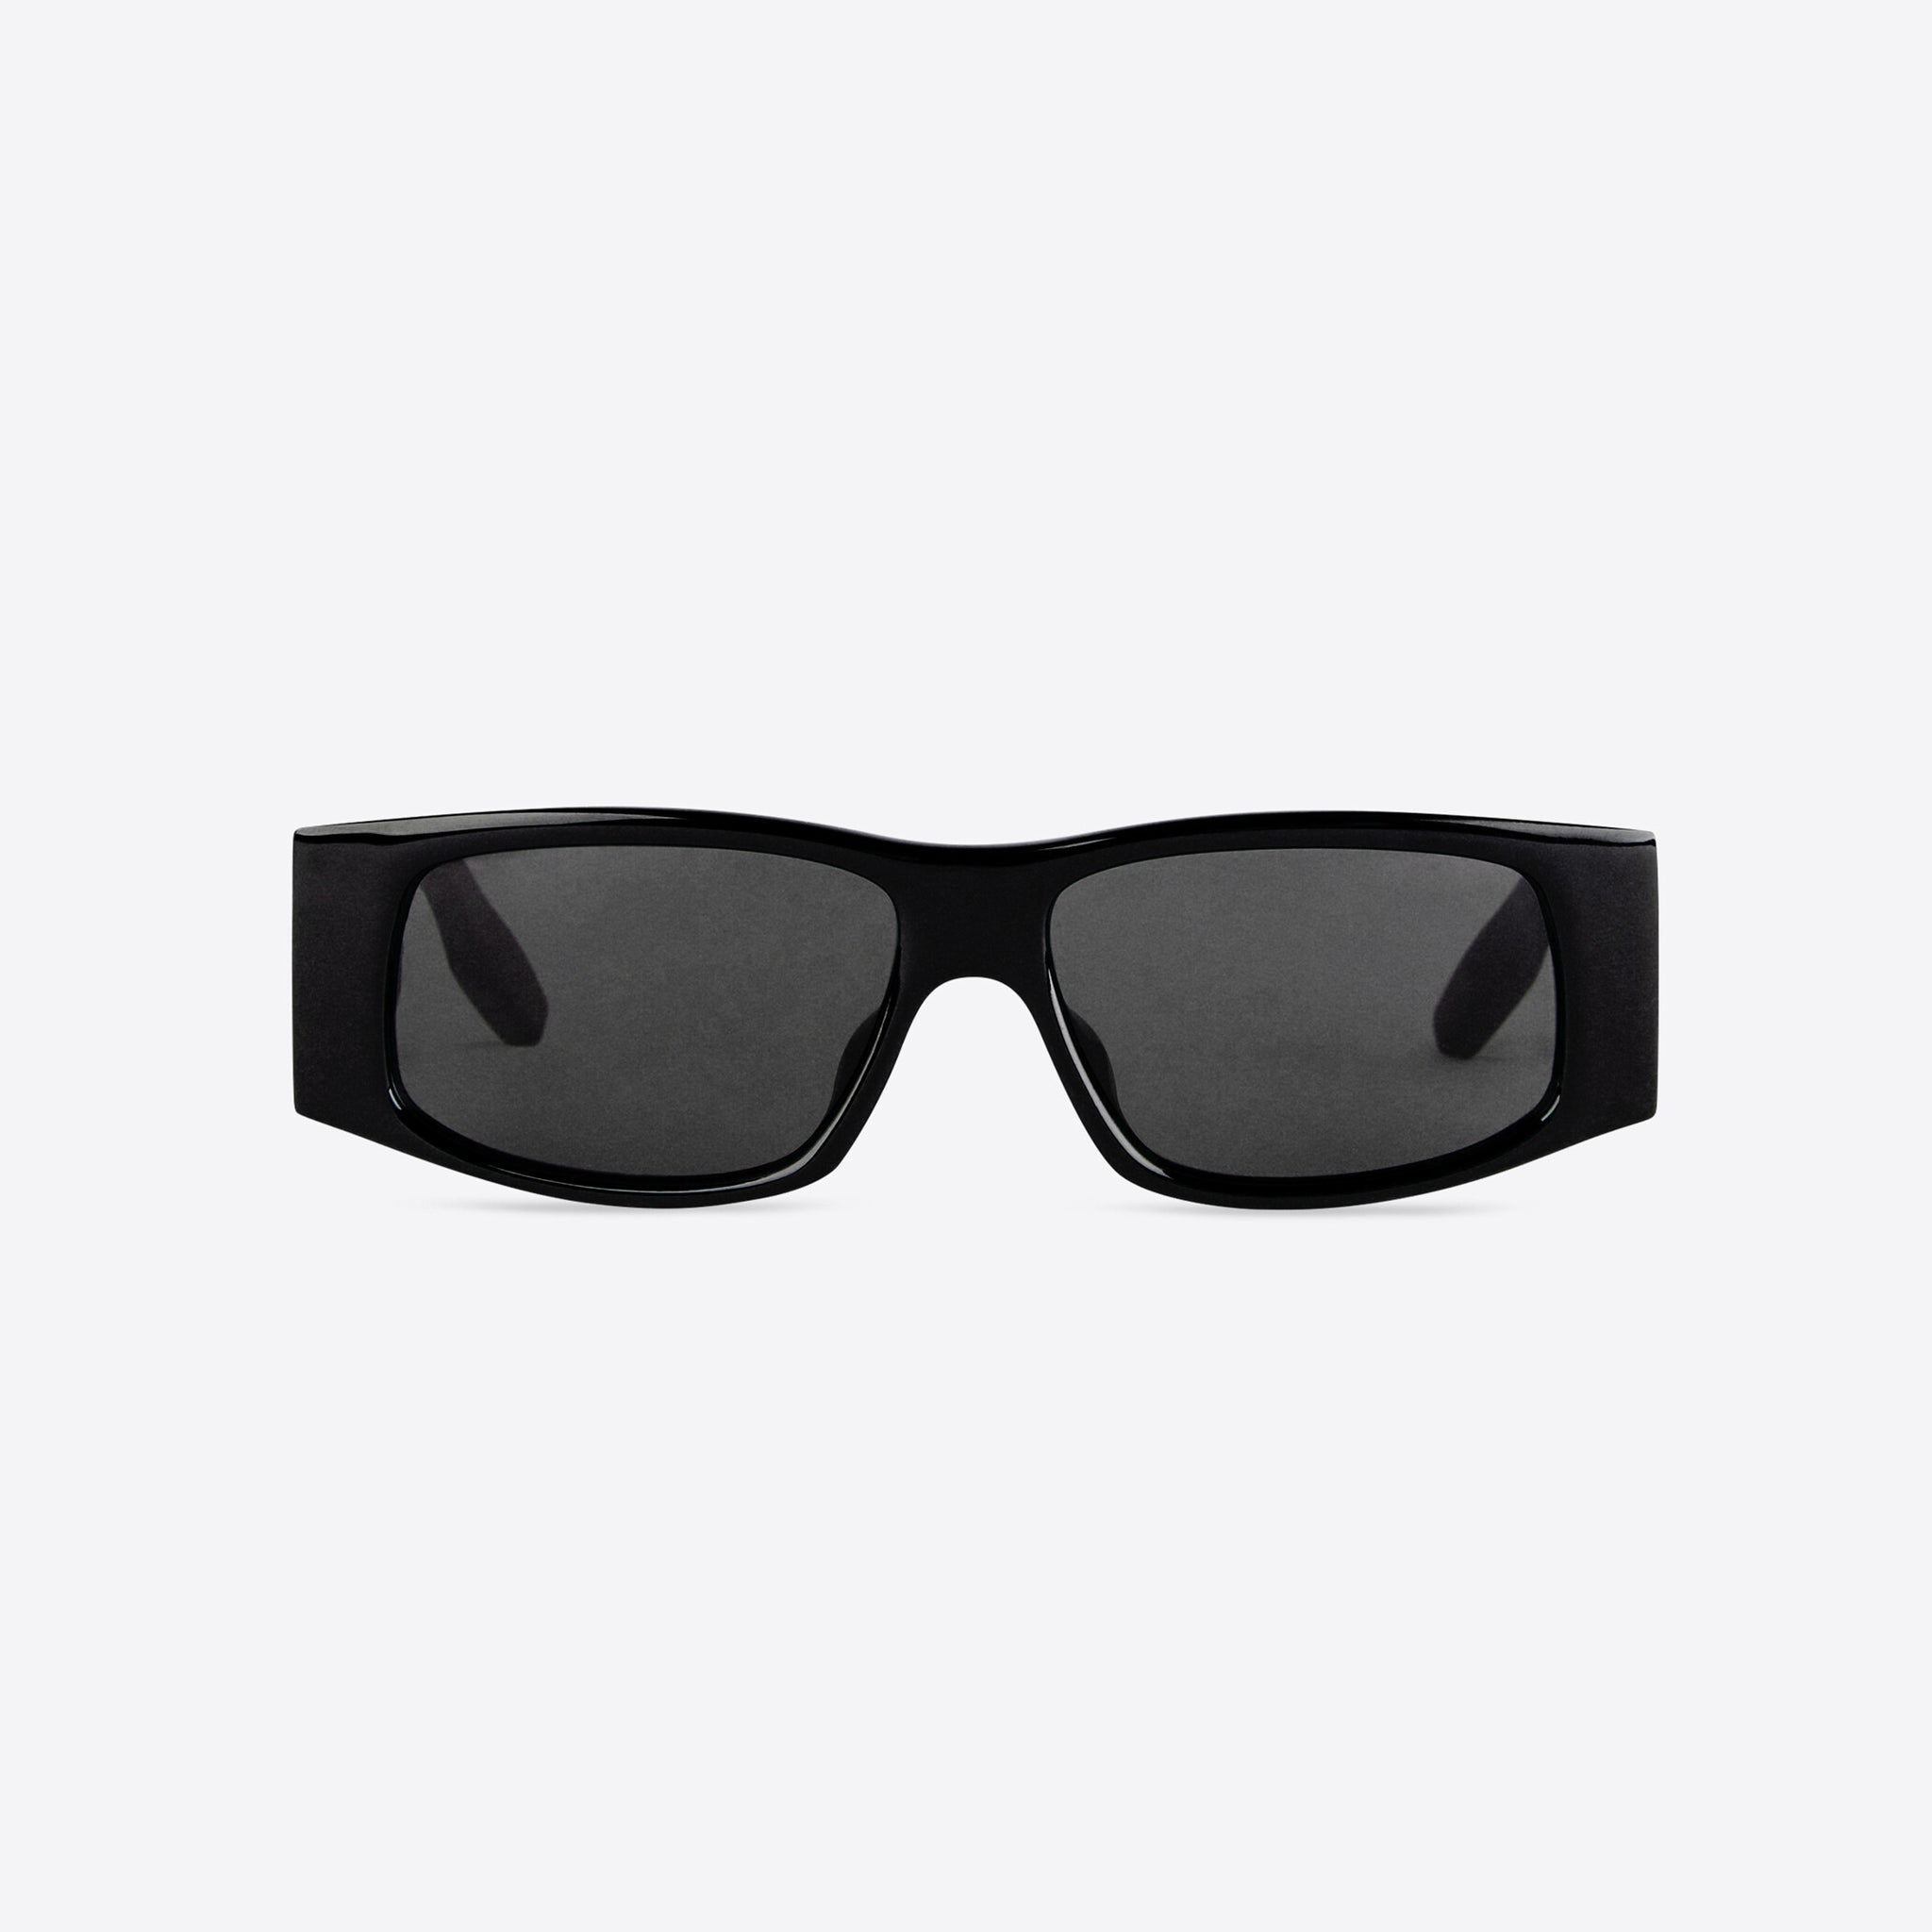 Balenciaga LED sunglasses seven-health.com